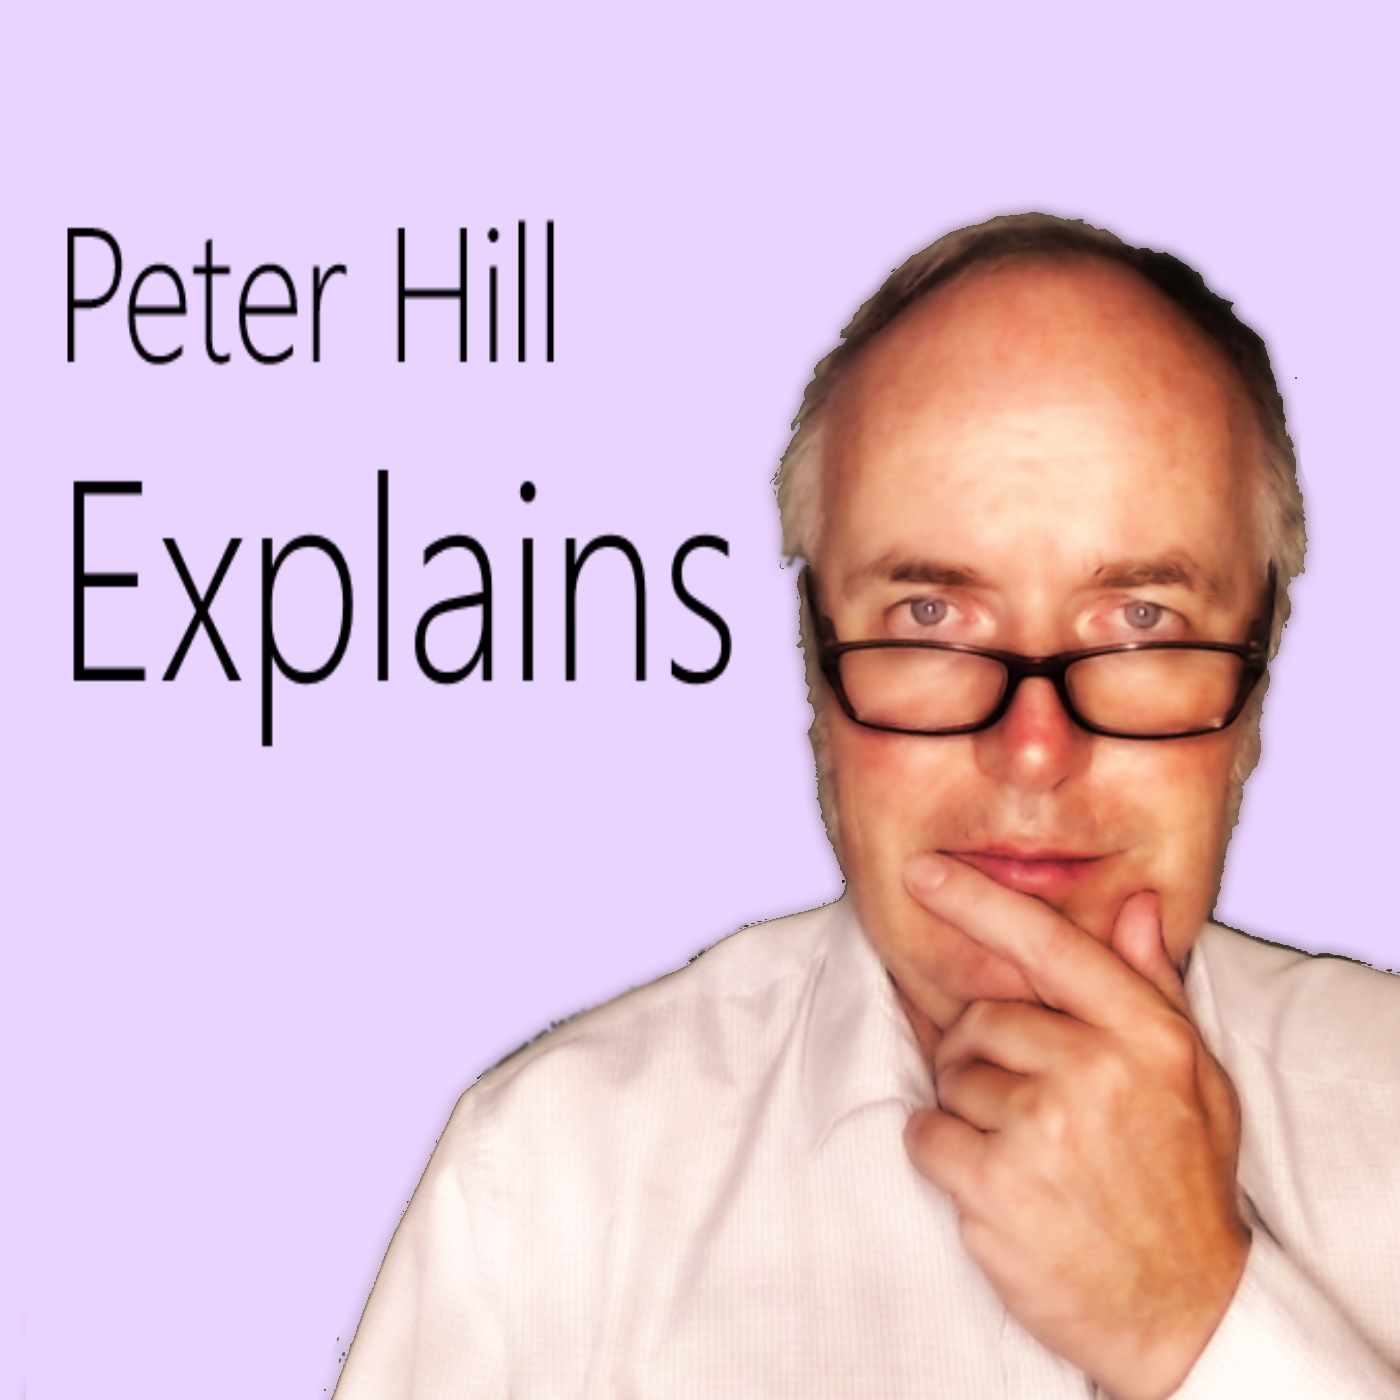 Peter Hill Explains Podcast artwork